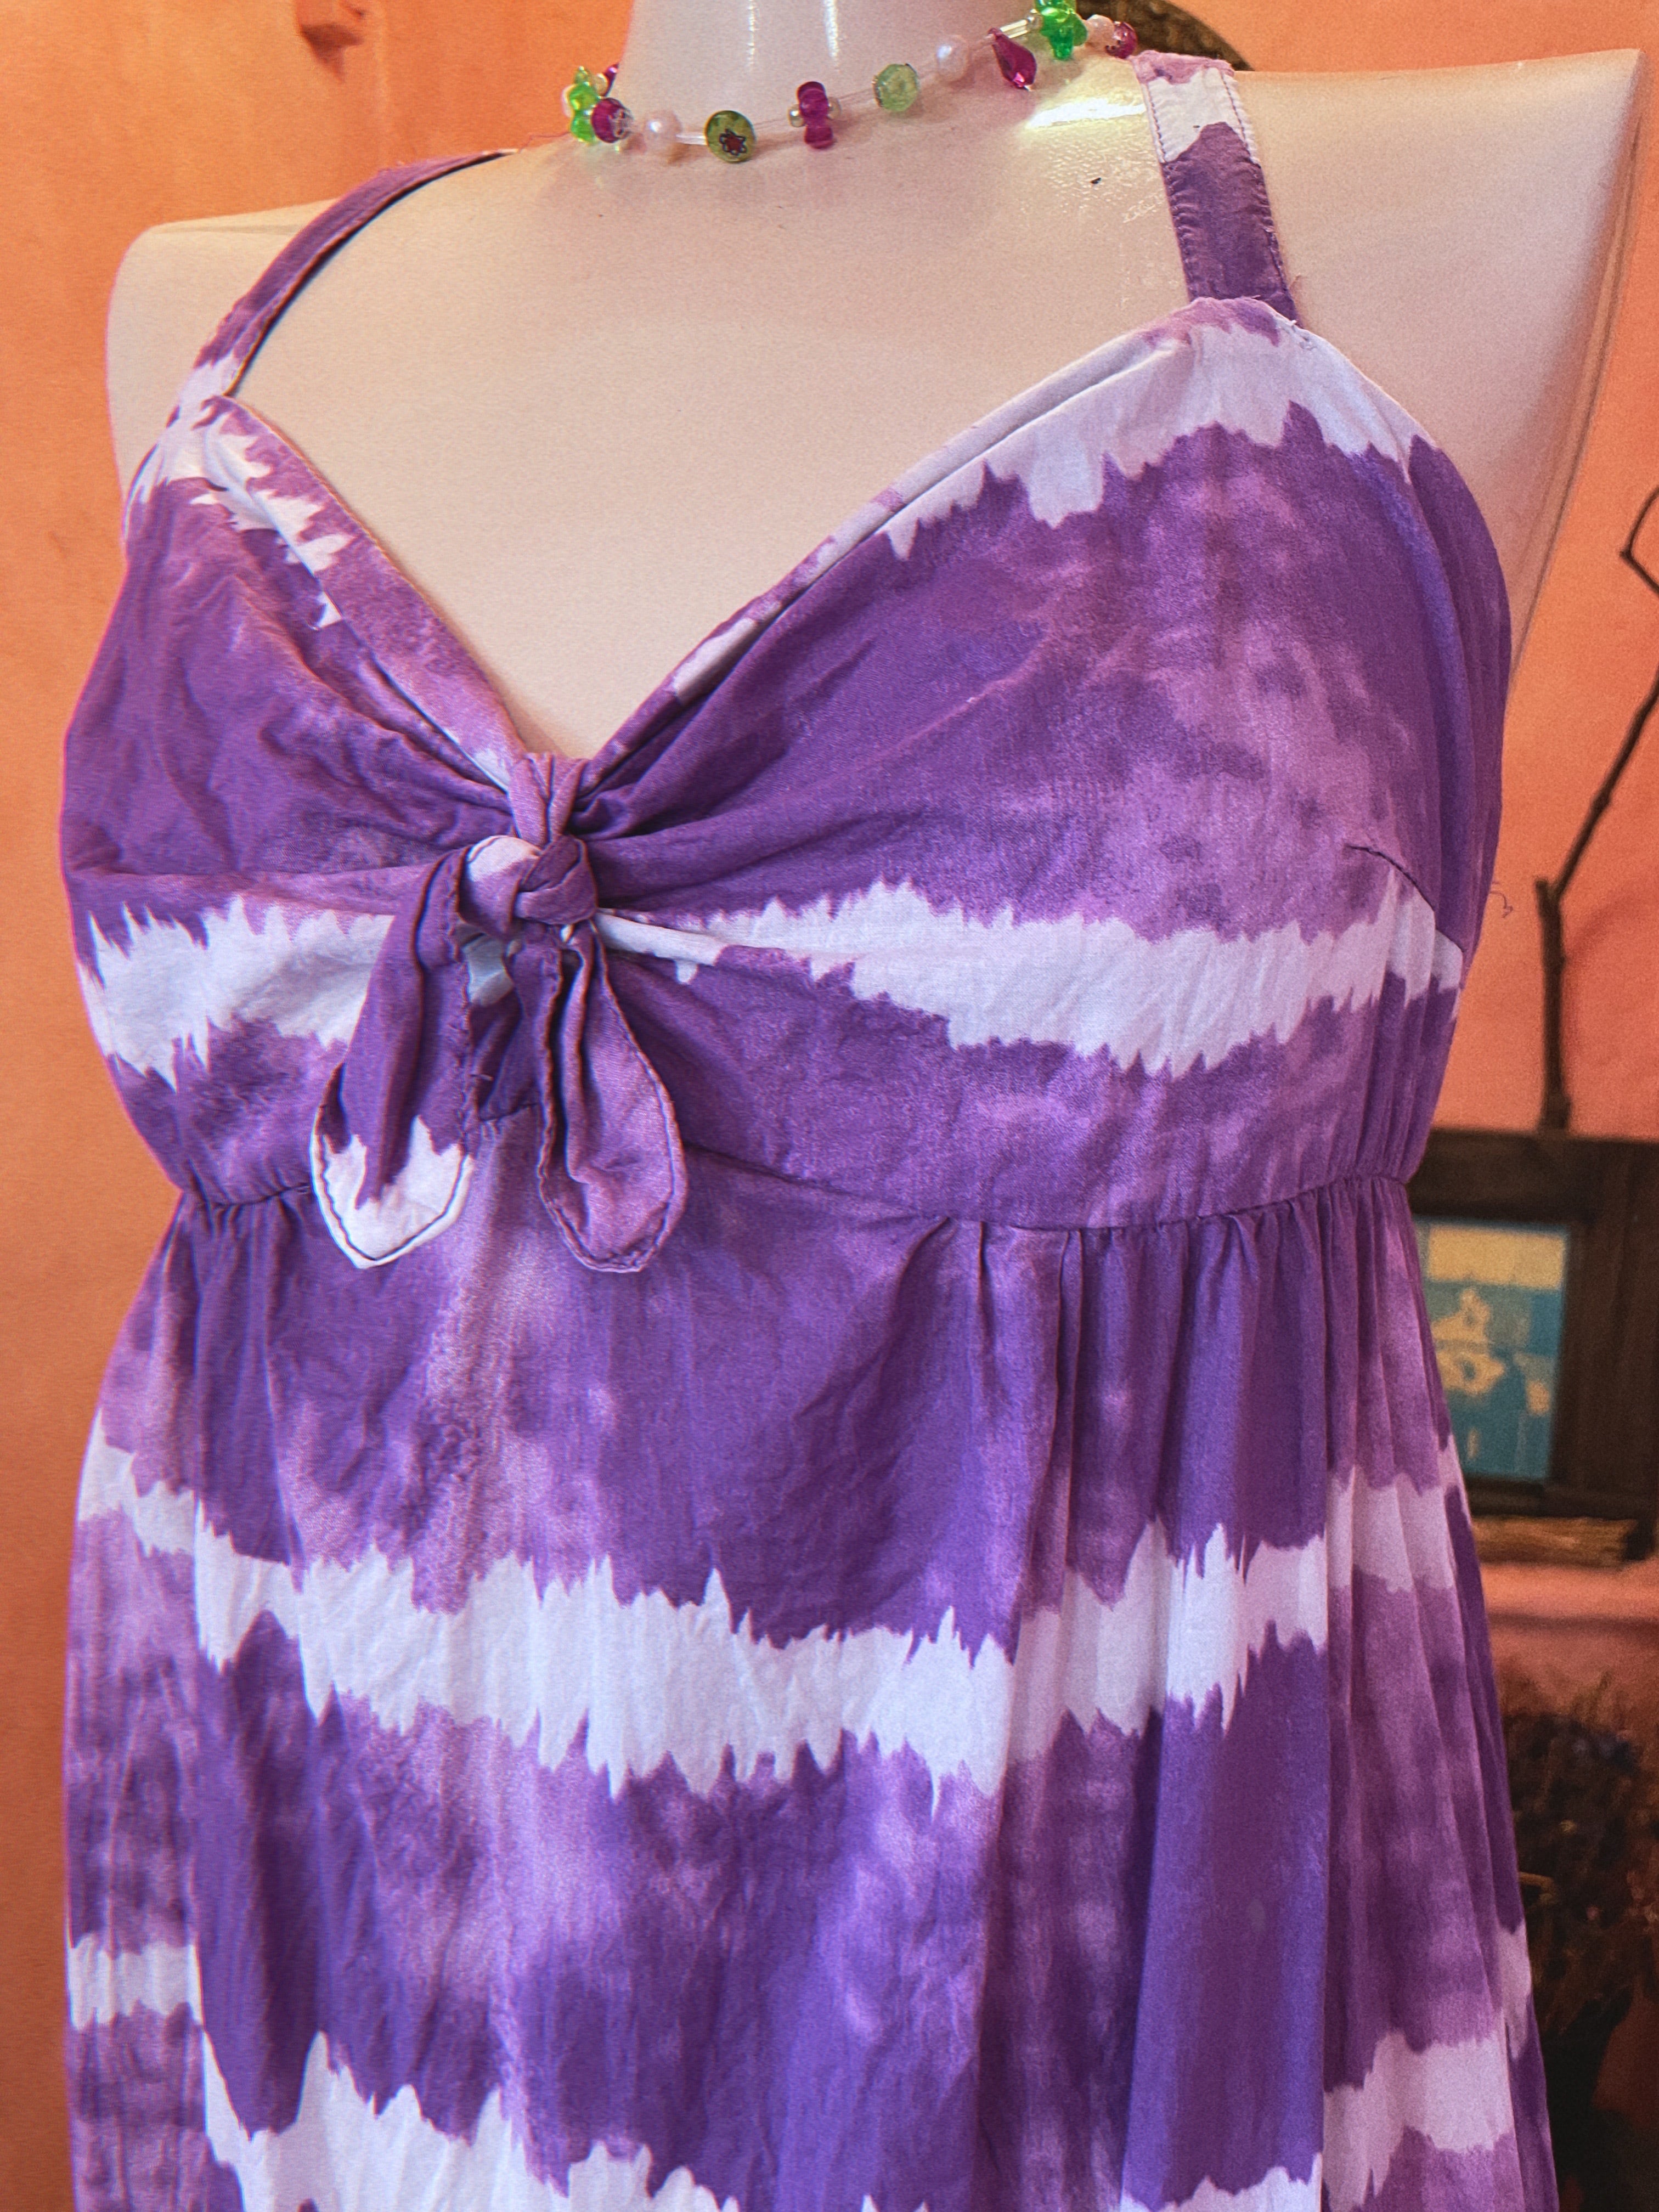 Used tie dye style print camisole dress